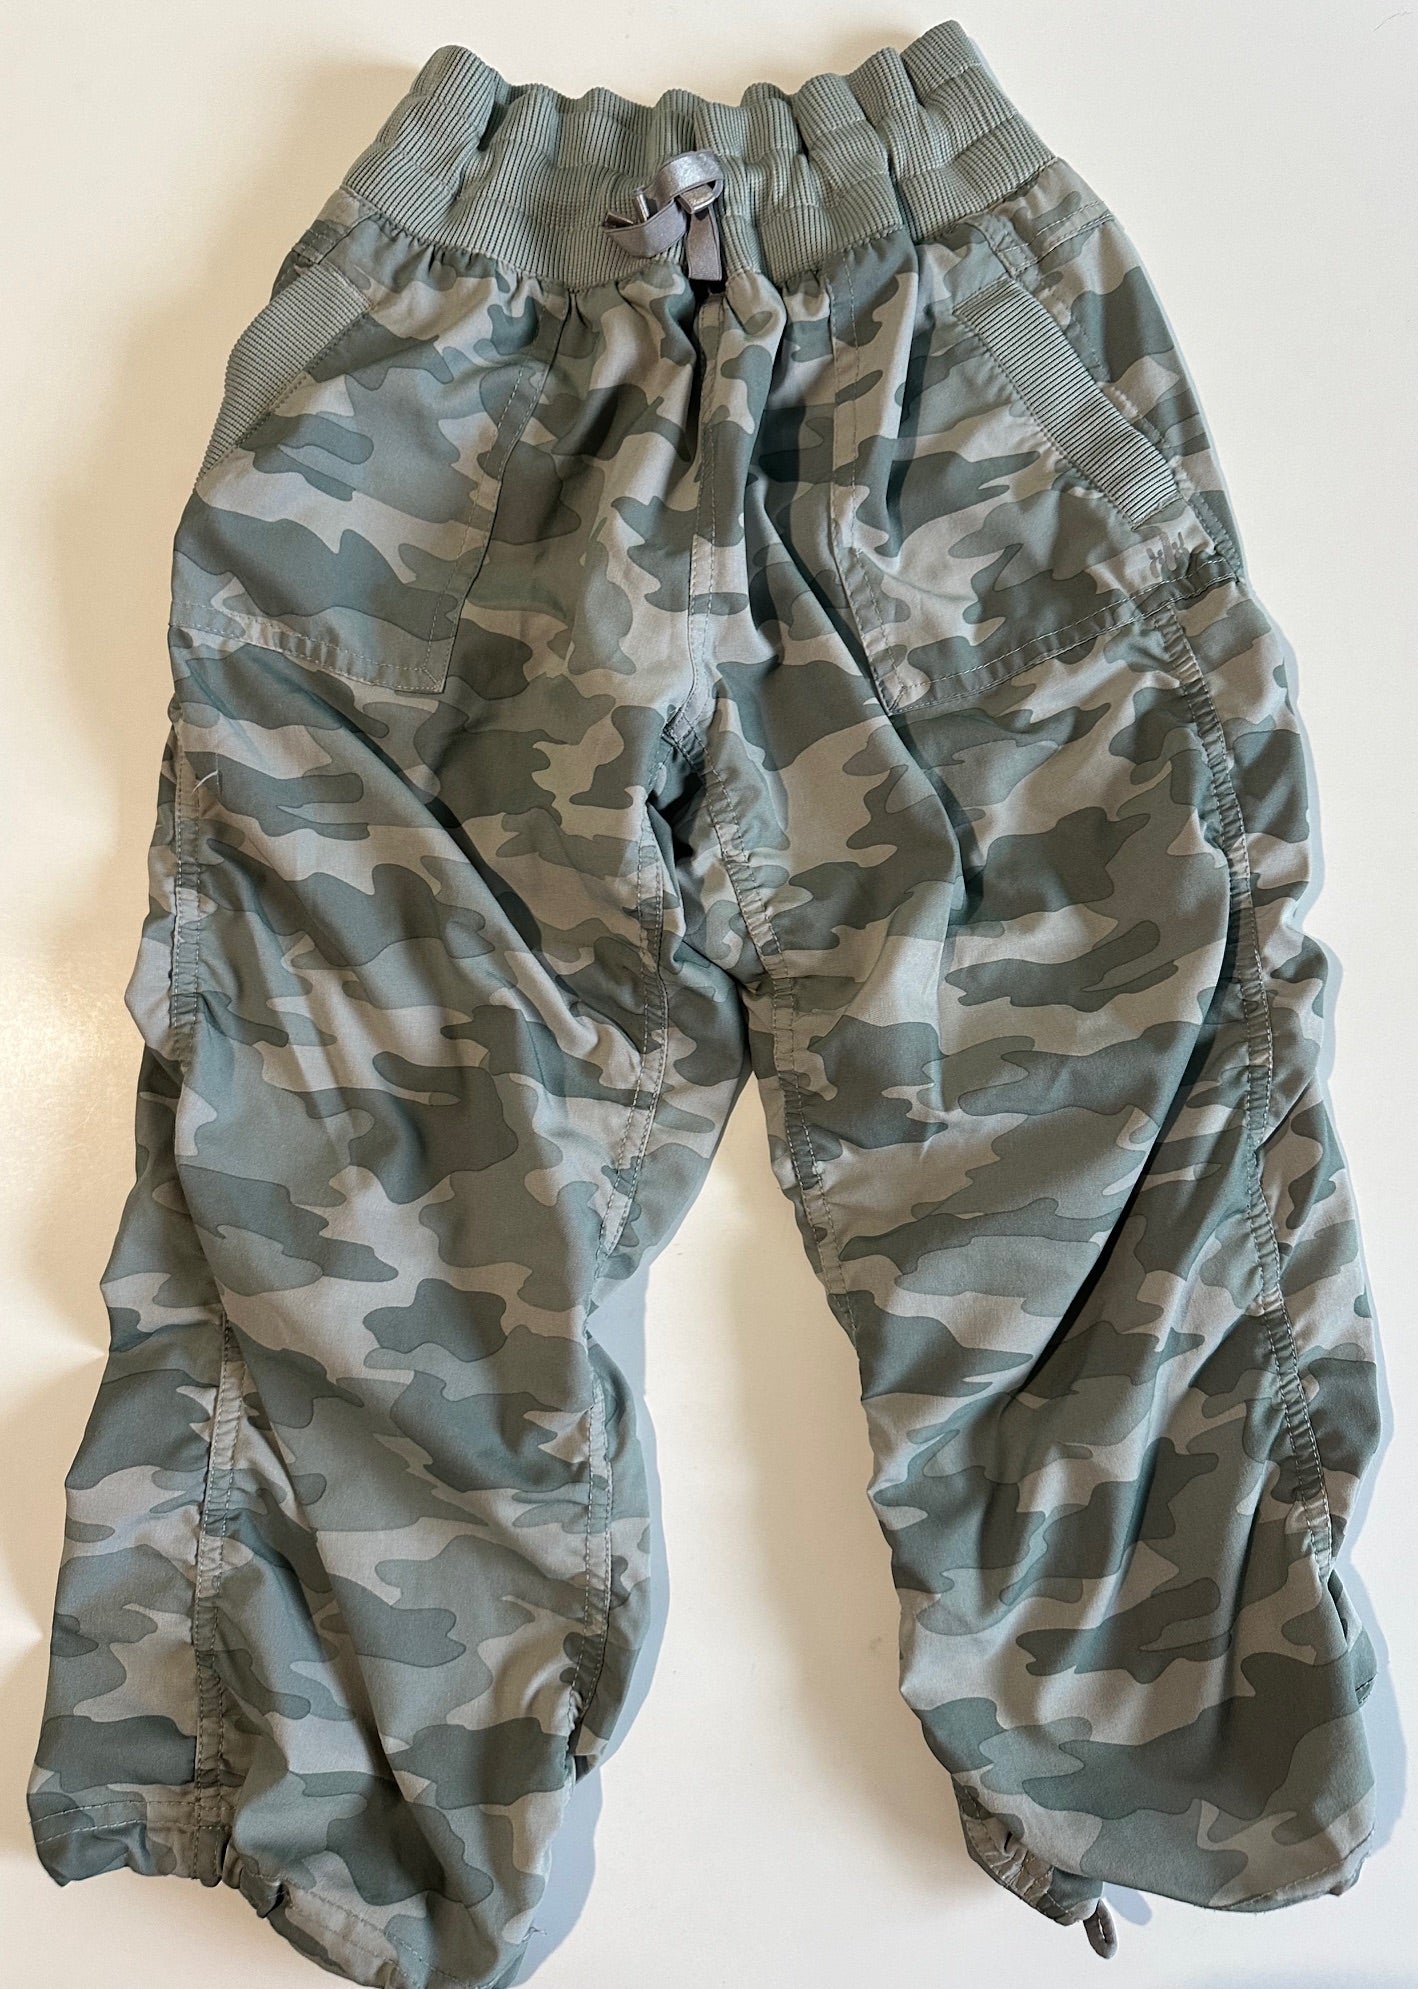 Kyodan Girls, Pale Camo Scrunchy Capri Pants - Size Medium (10/12